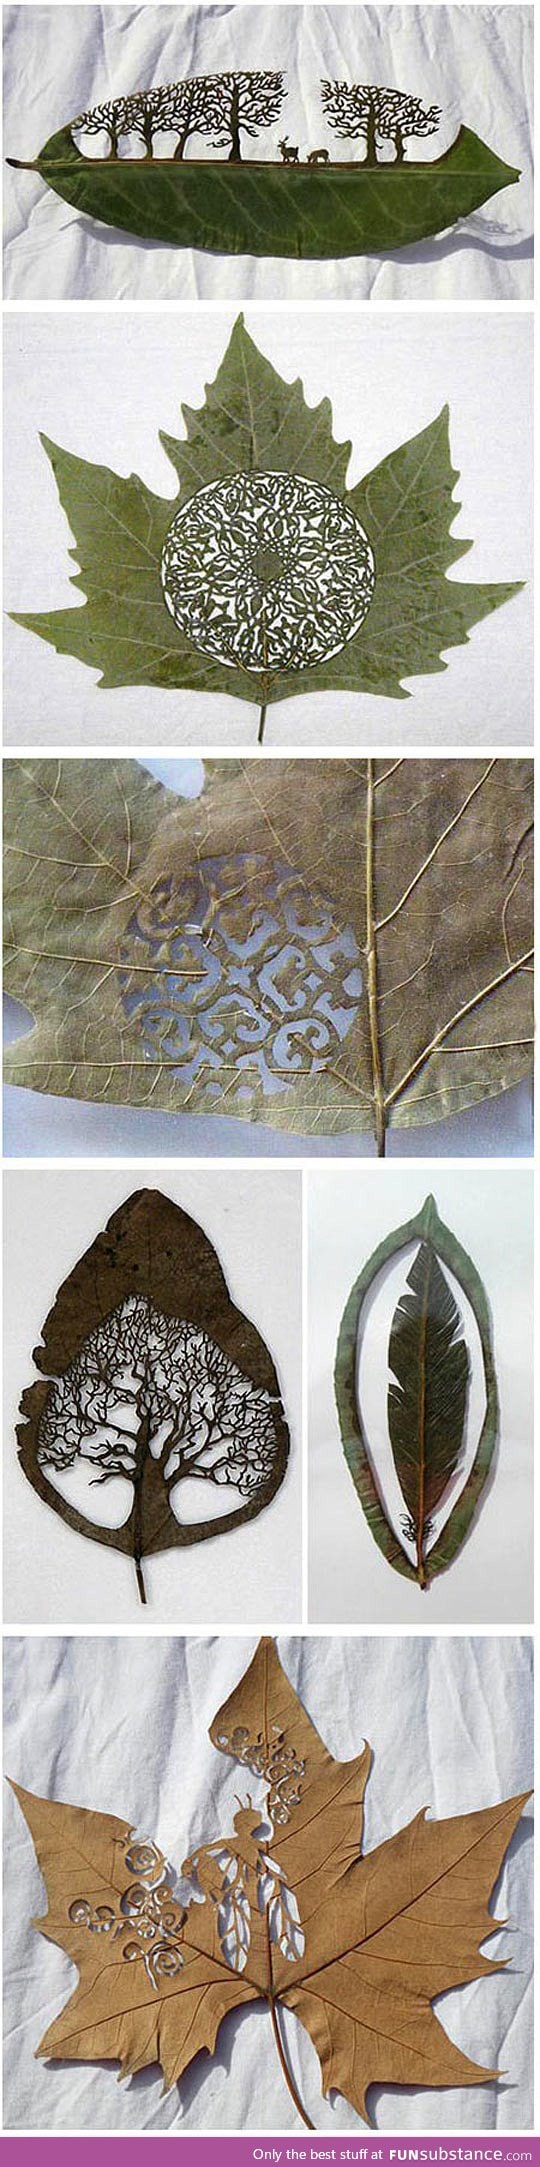 Art in a leaf